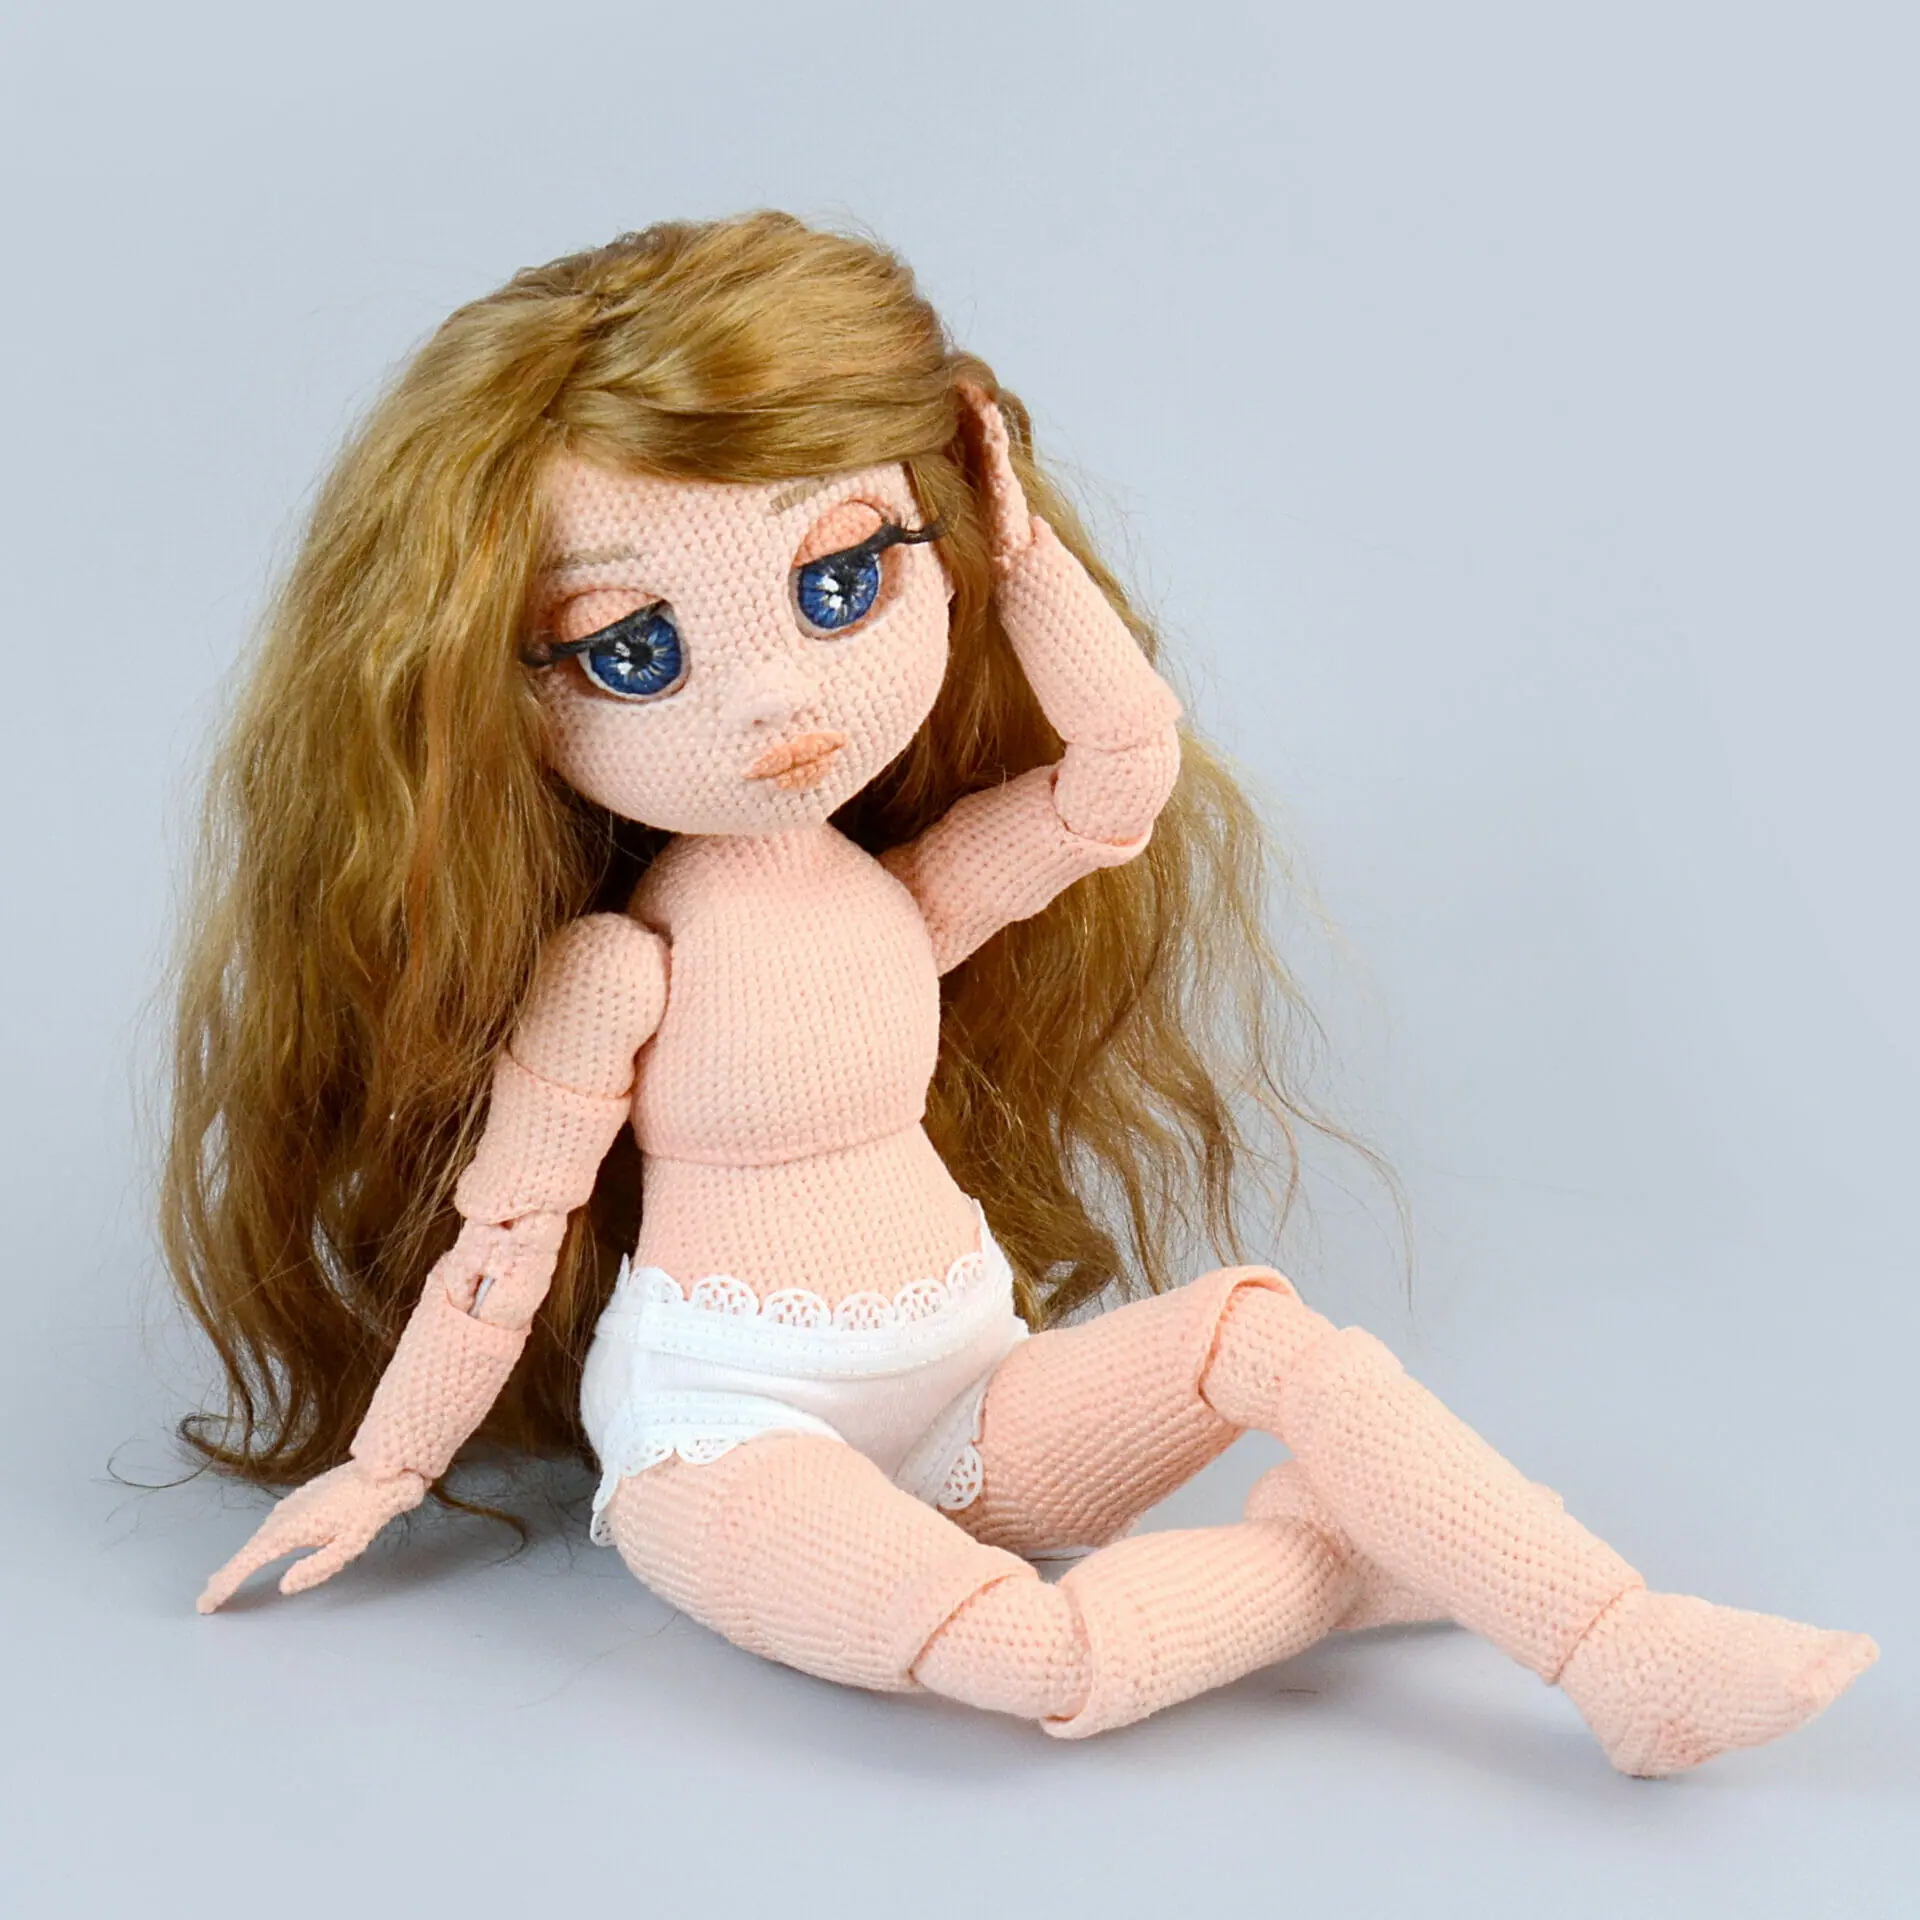 Lingerie set for Barbie - panties, bustier, stockings